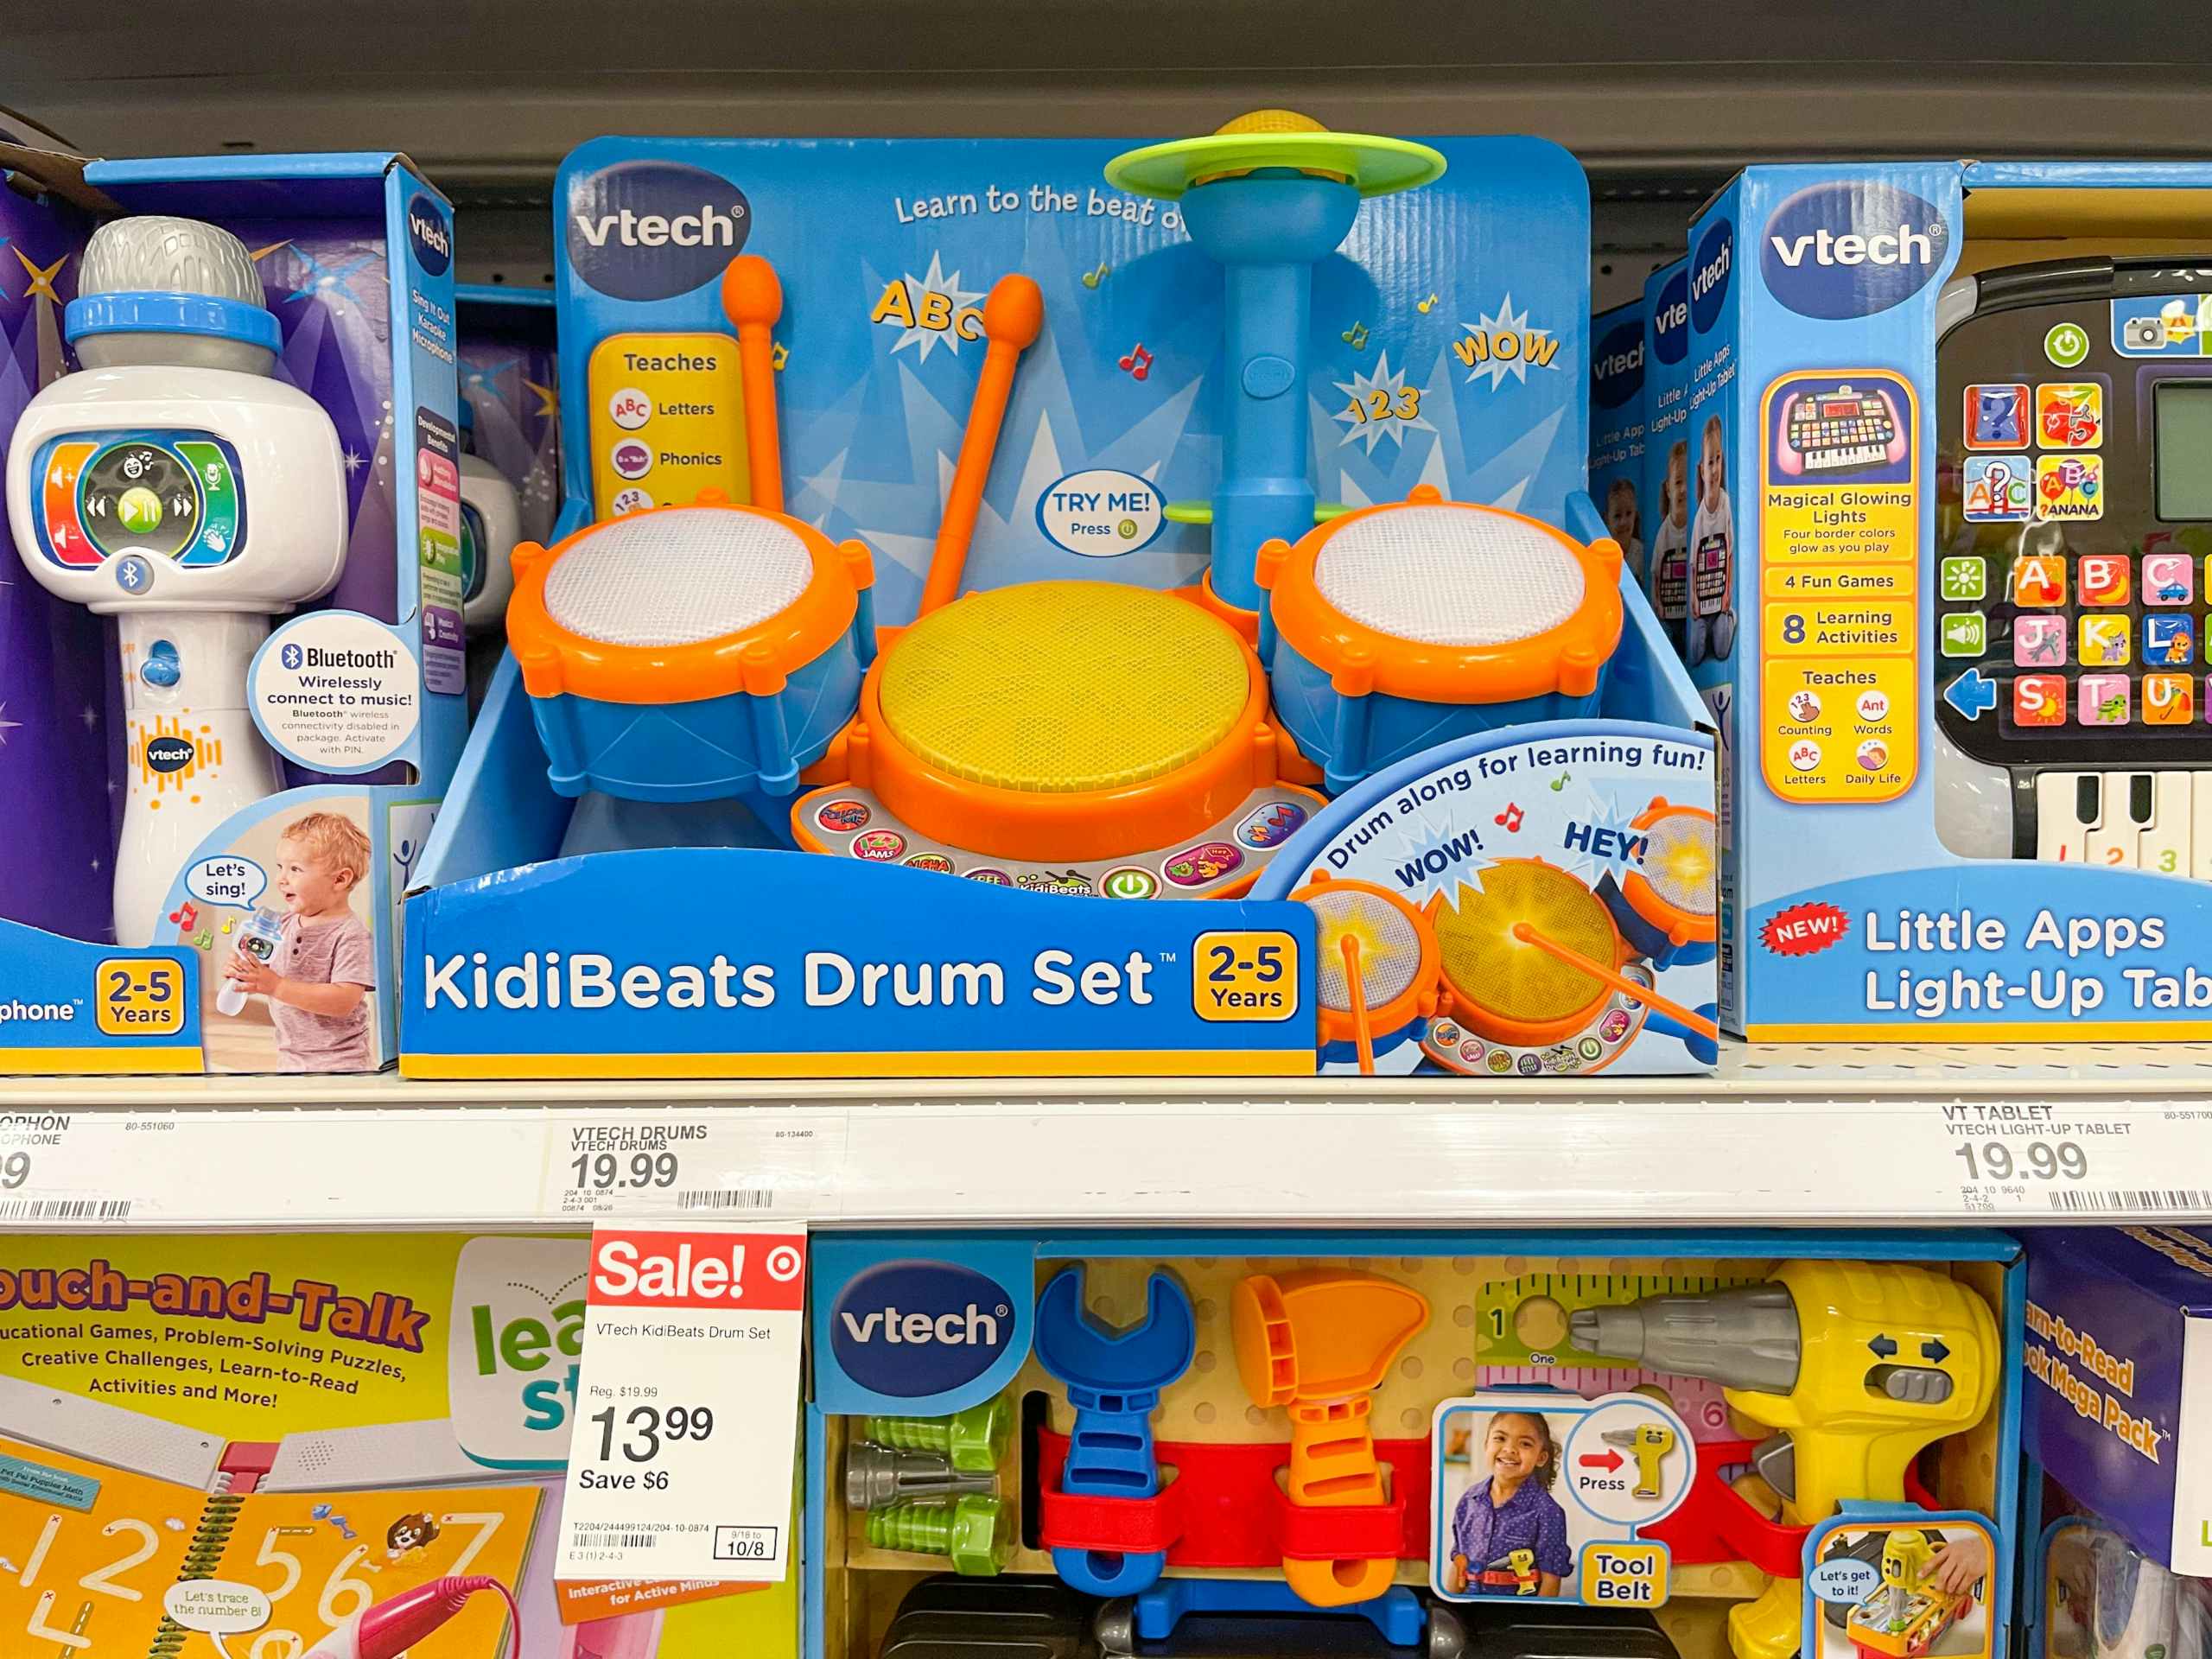 A Vtech drum set sitting on a store shelf